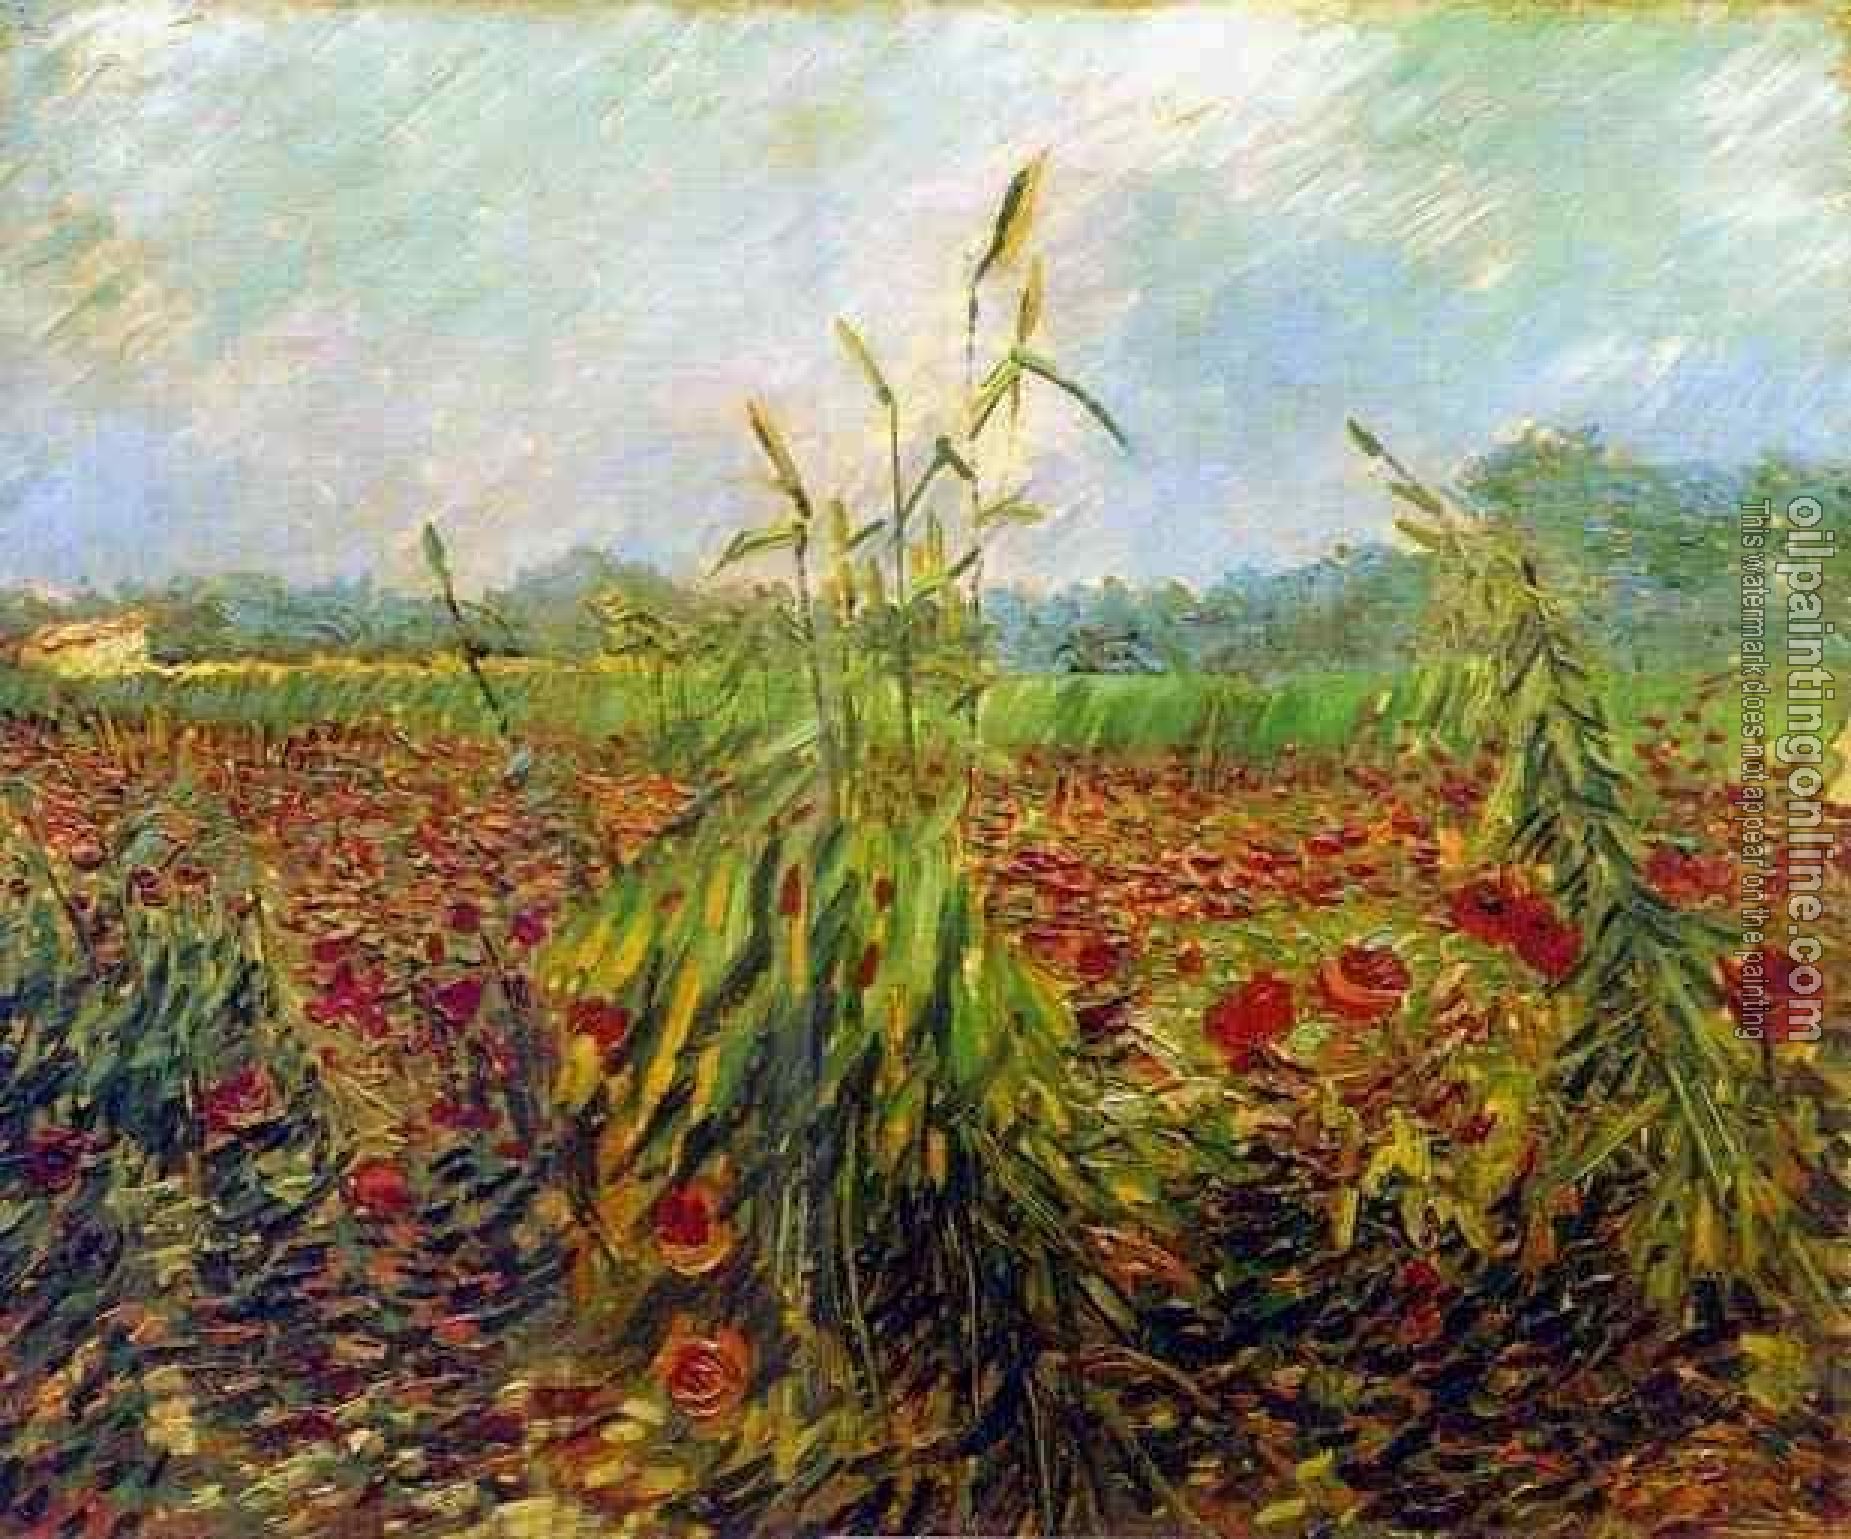 Gogh, Vincent van - Green Ears of Wheat